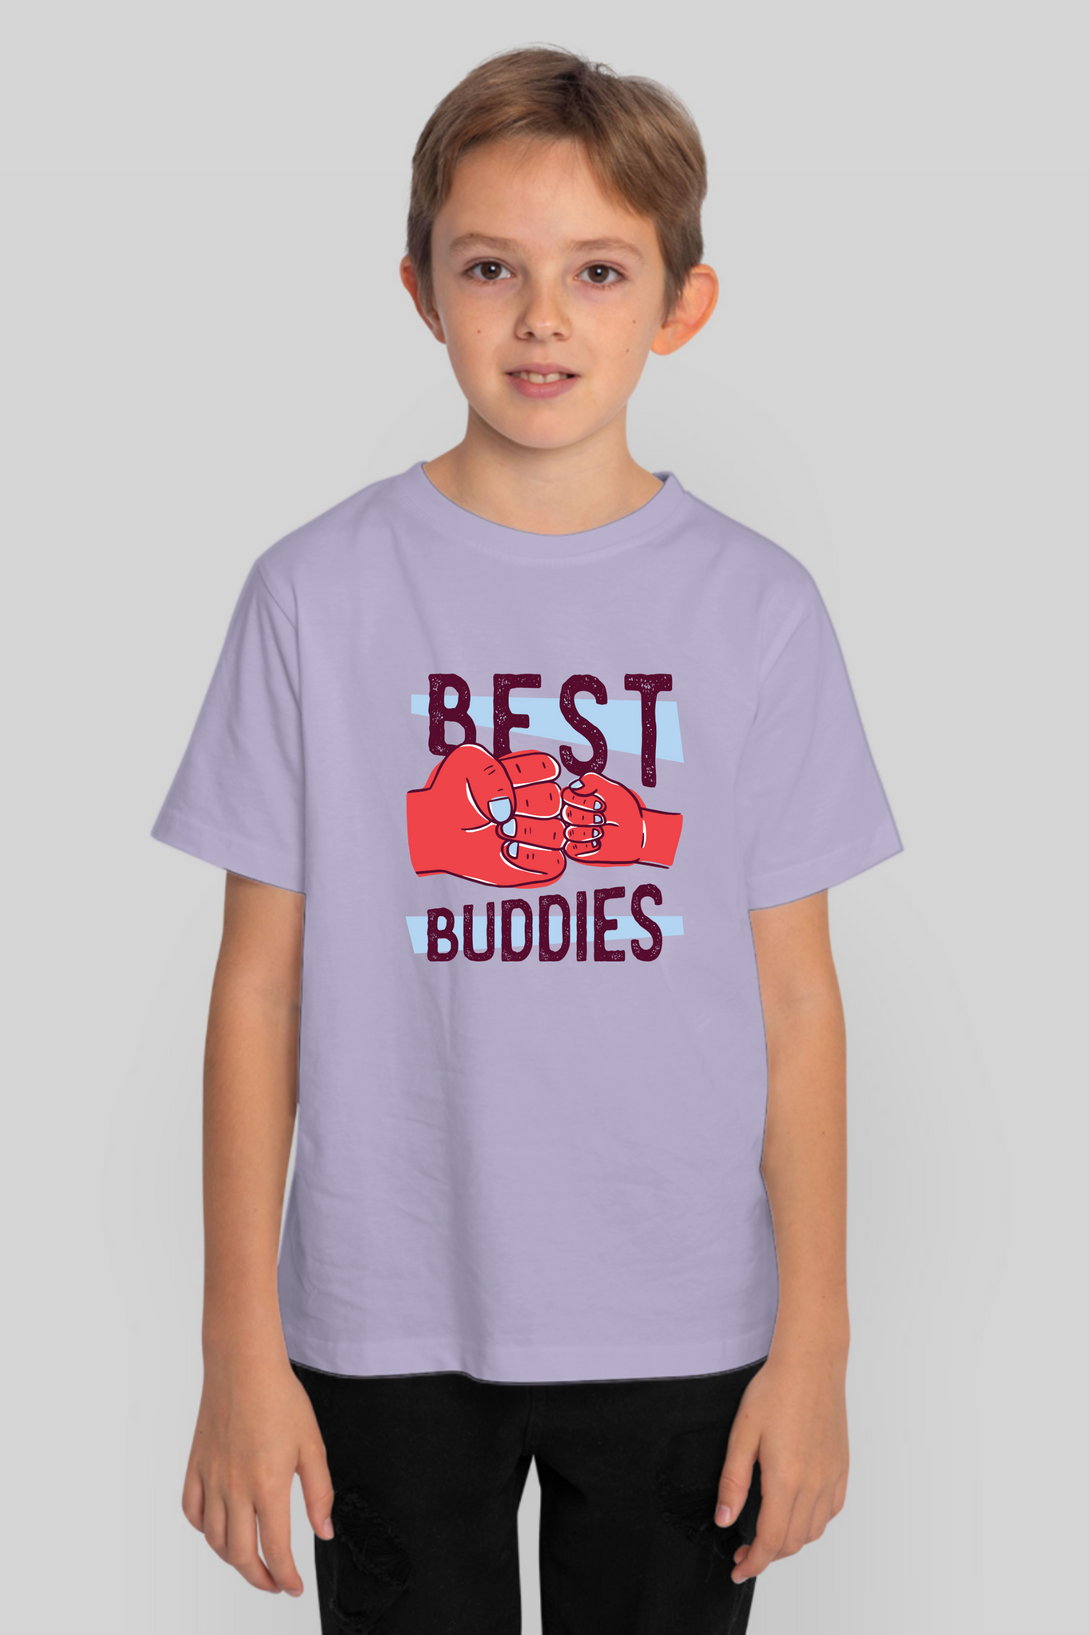 Best Buddies Printed T-Shirt For Boy - WowWaves - 10